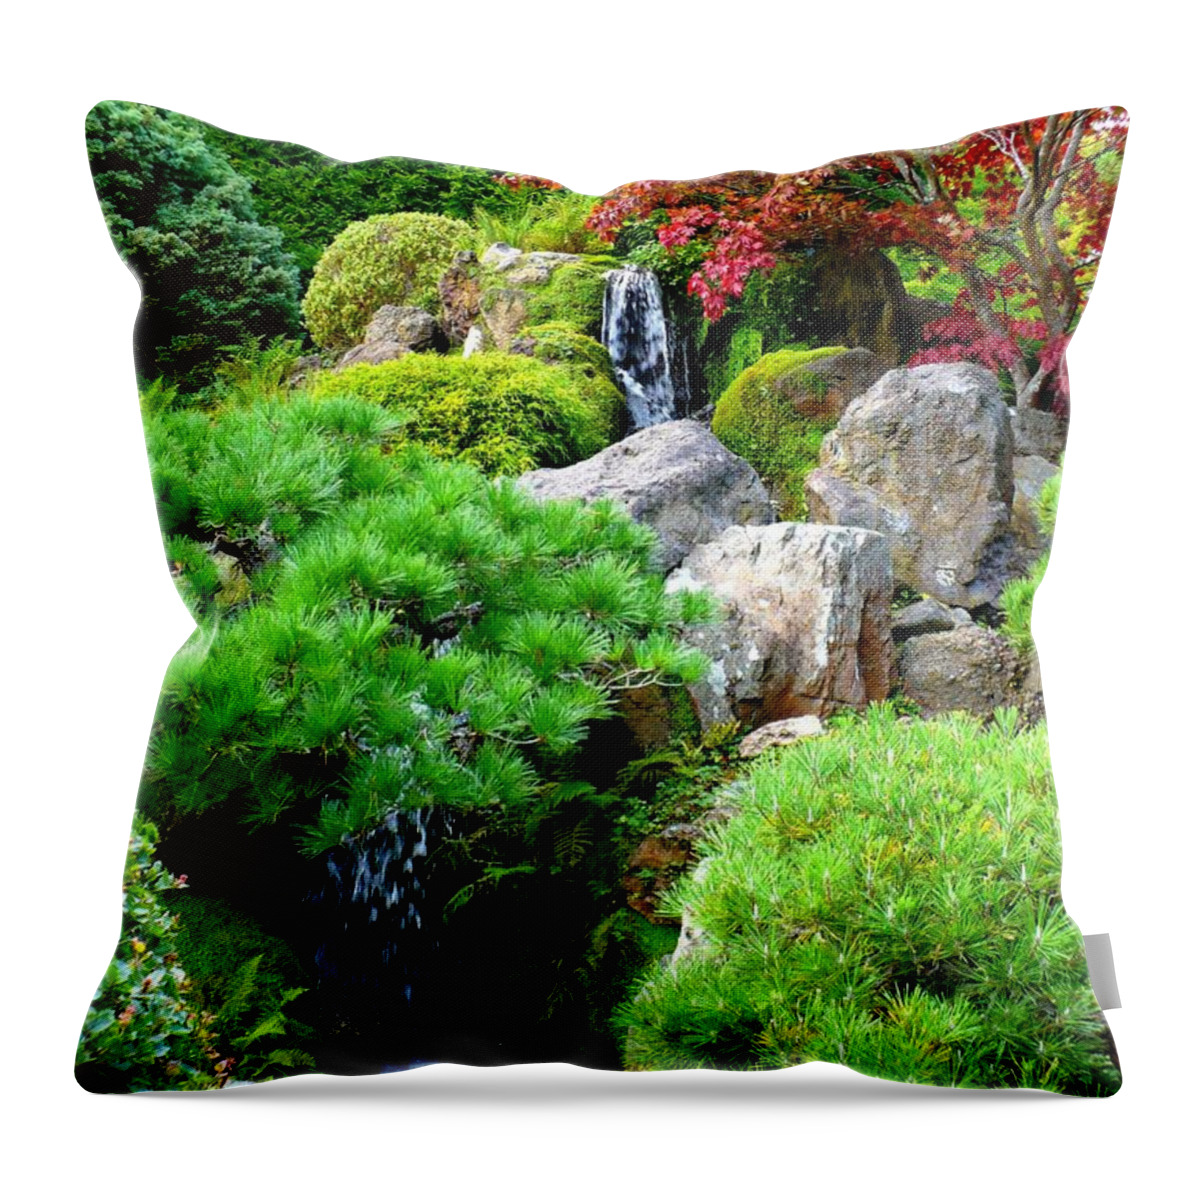 Garden Throw Pillow featuring the photograph Waterfalls in Japanese Garden by Carol Groenen